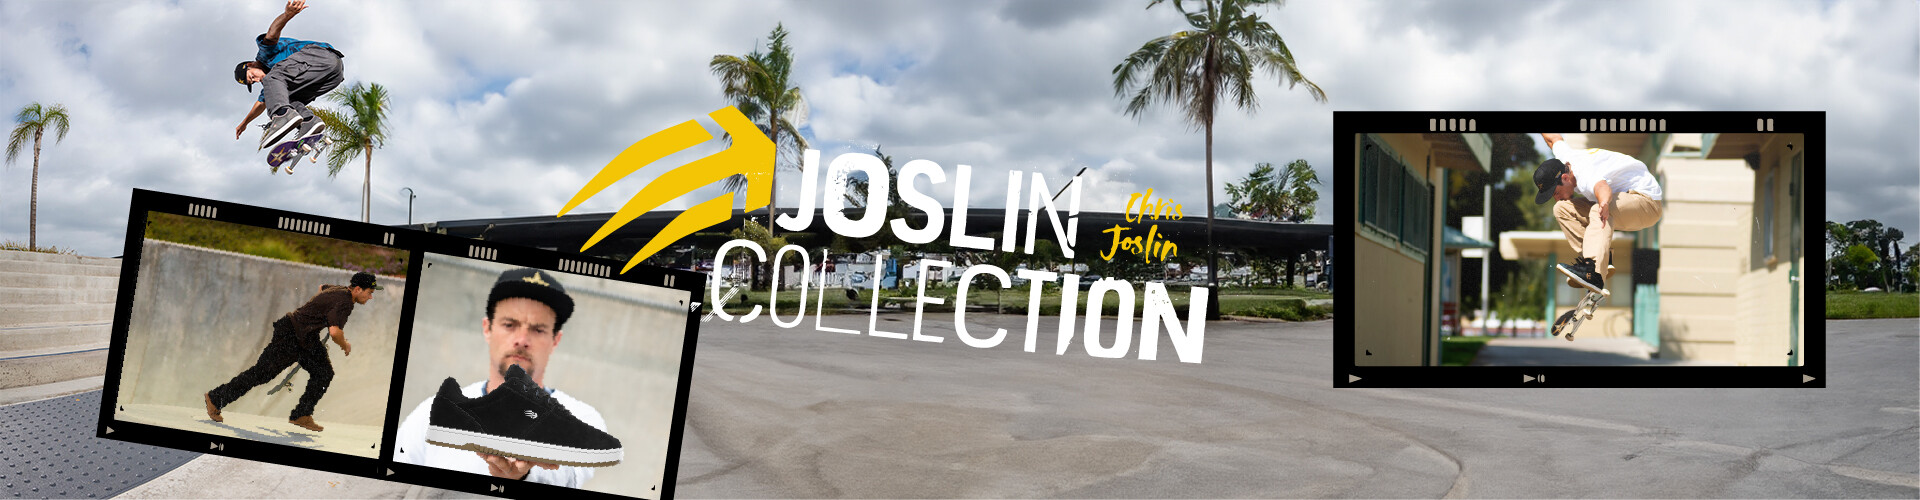 Joslin Collection